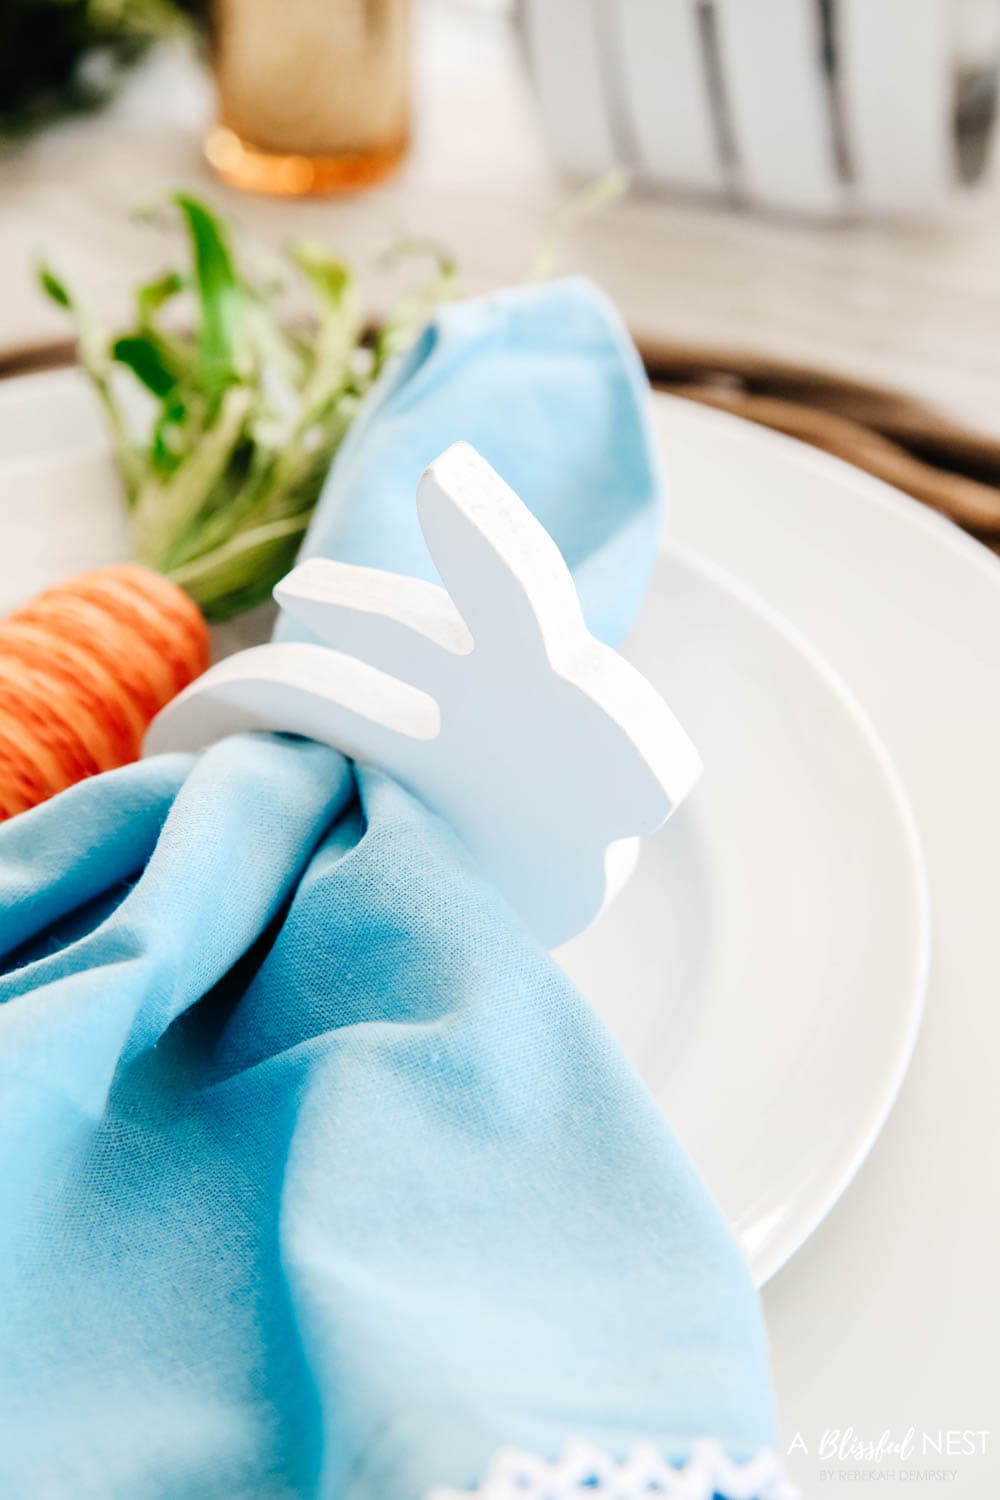 White wood bunny napkin holder with blue napkin tucked inside